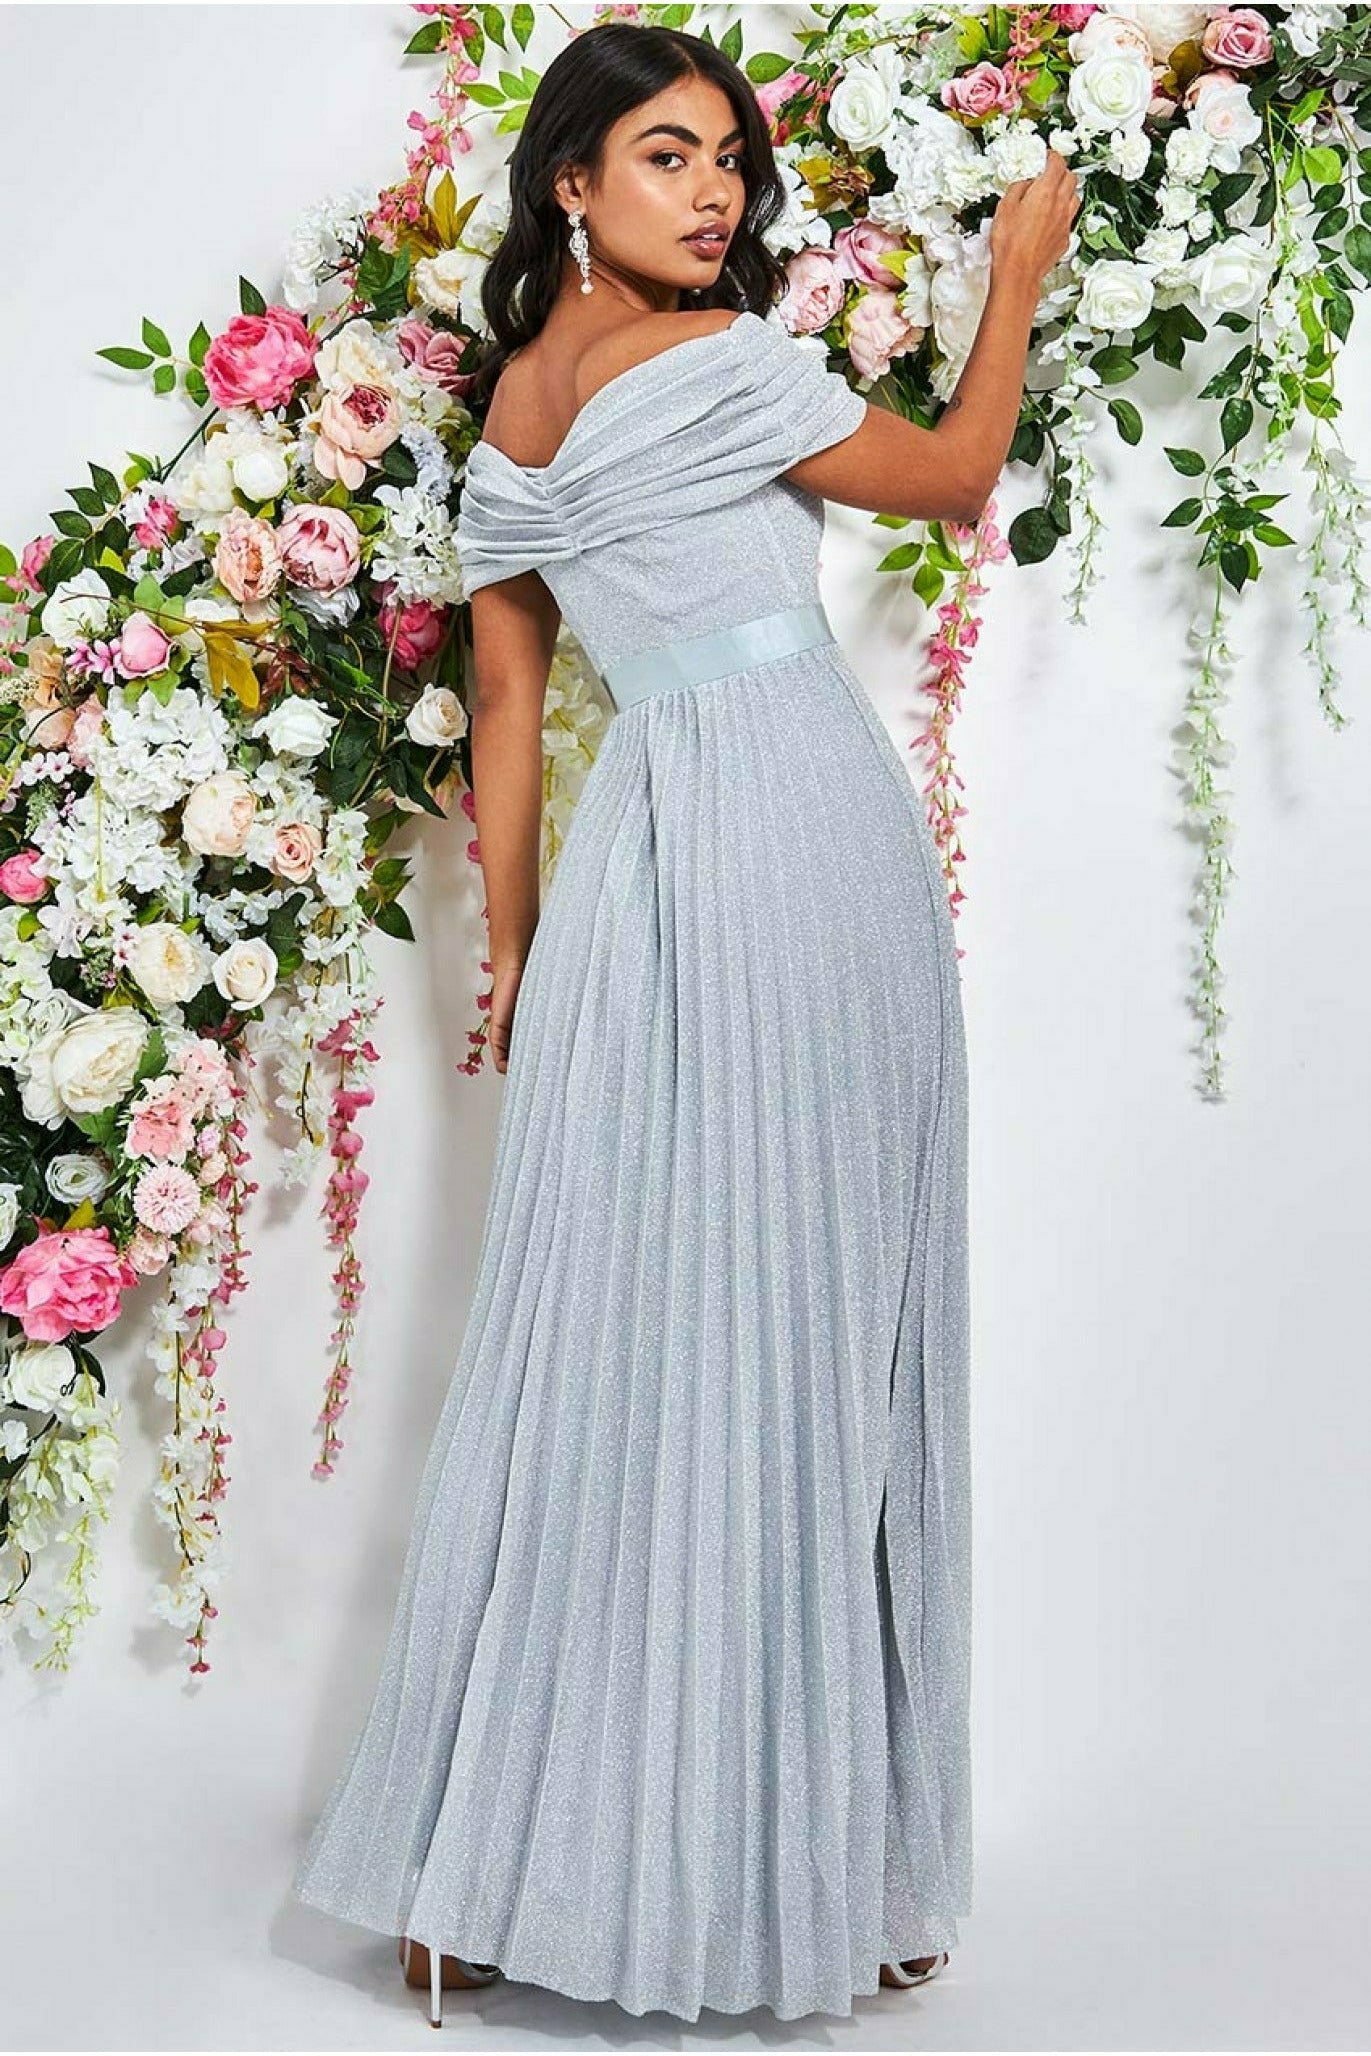 Bardot Pleated Skirt Wedding Dress - Silver DR3096